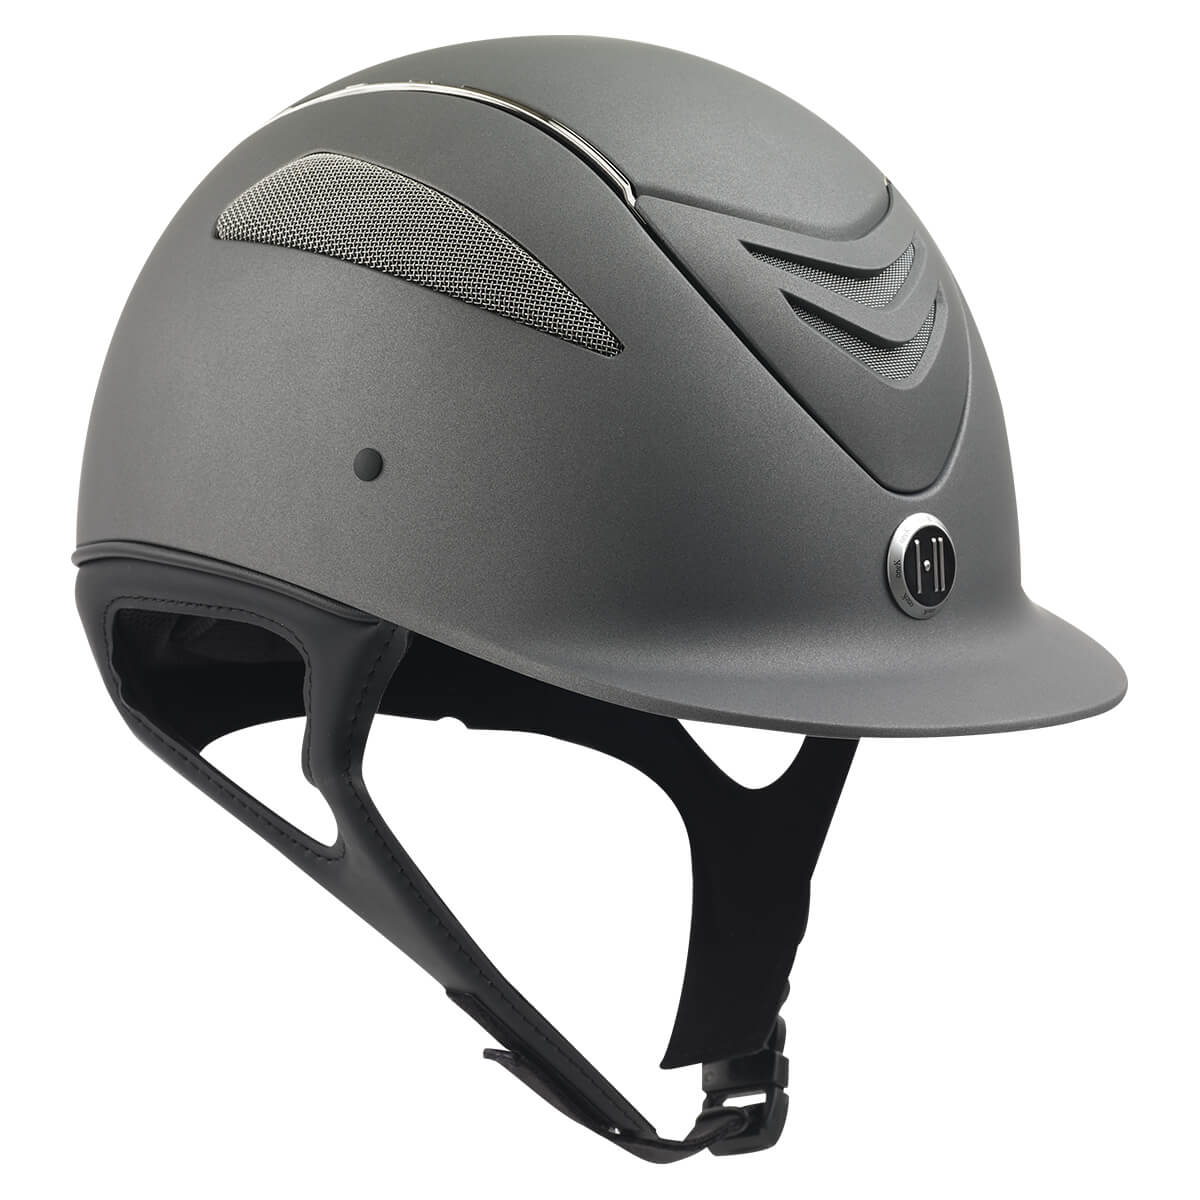 Details about   One K Defender Suede Helmet Black Matte FREE WEATHERPROOF COVER 